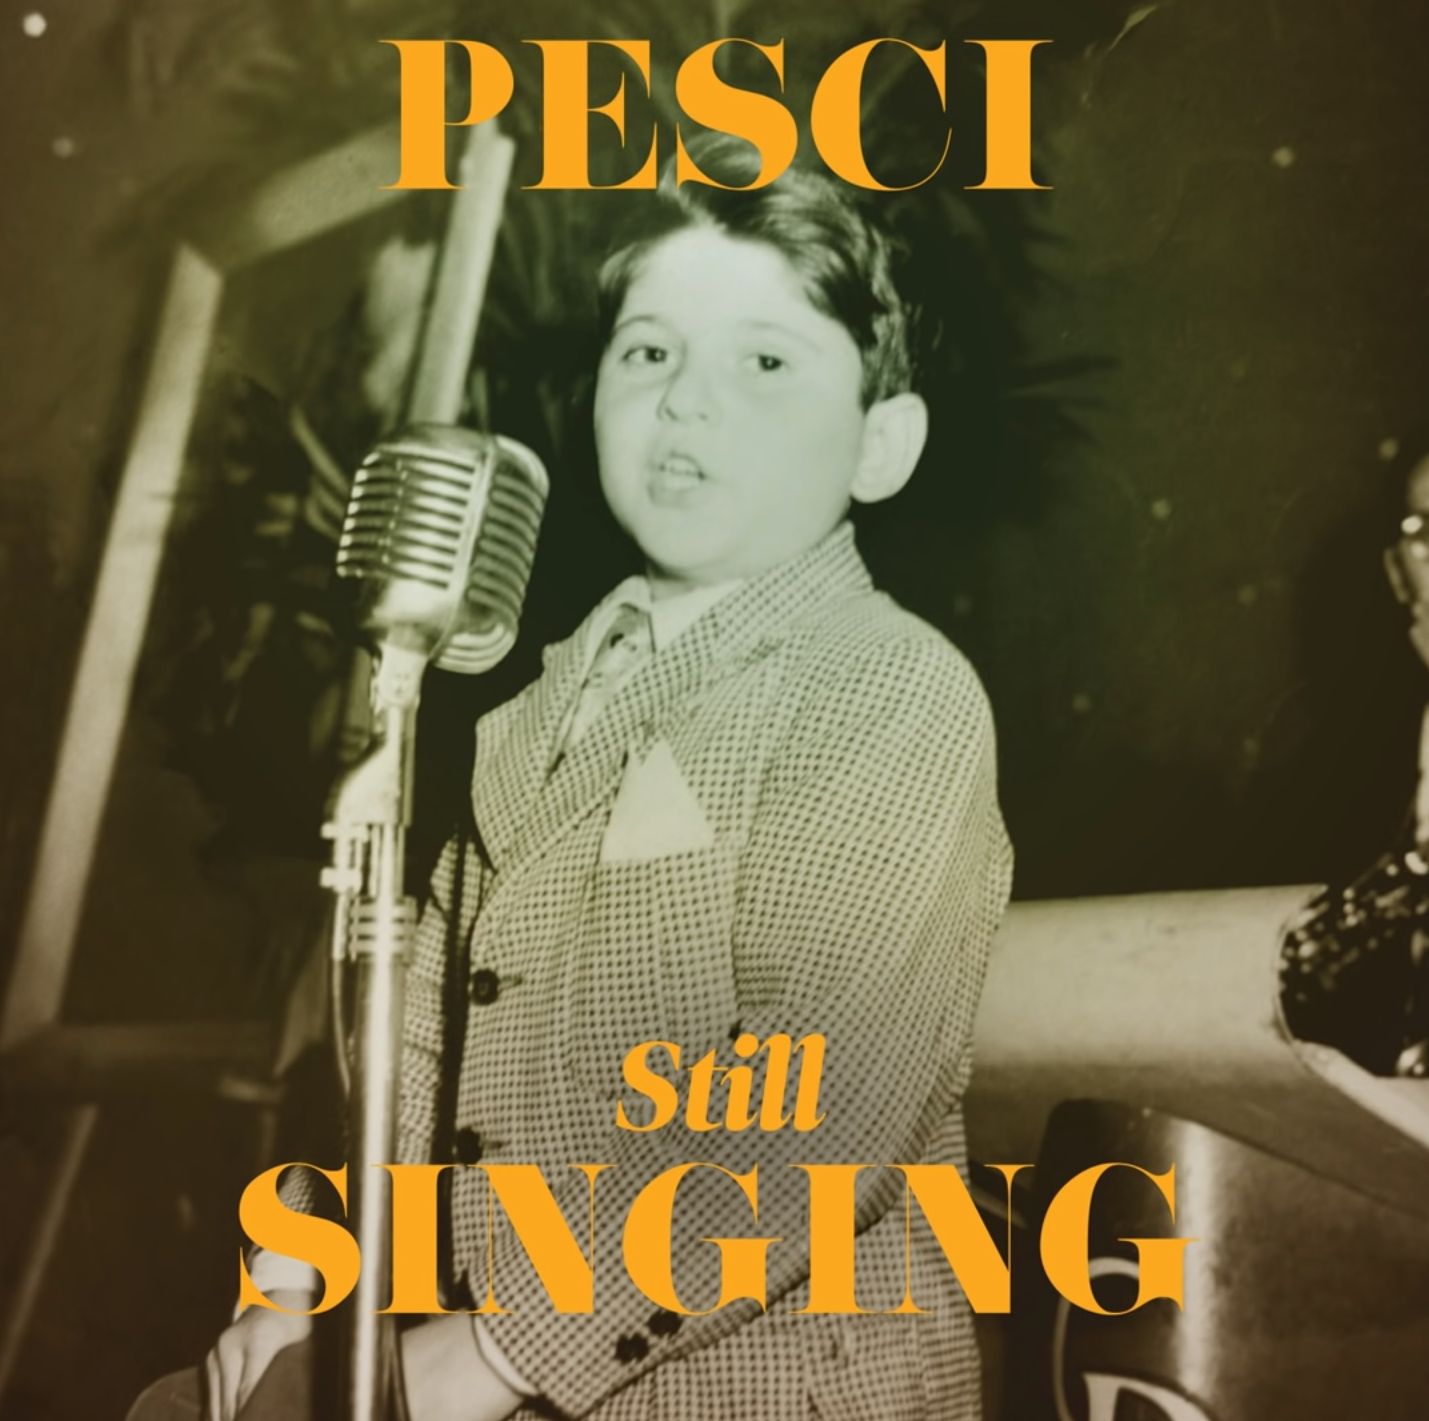 Coperta album Joe Pesci Still Singing